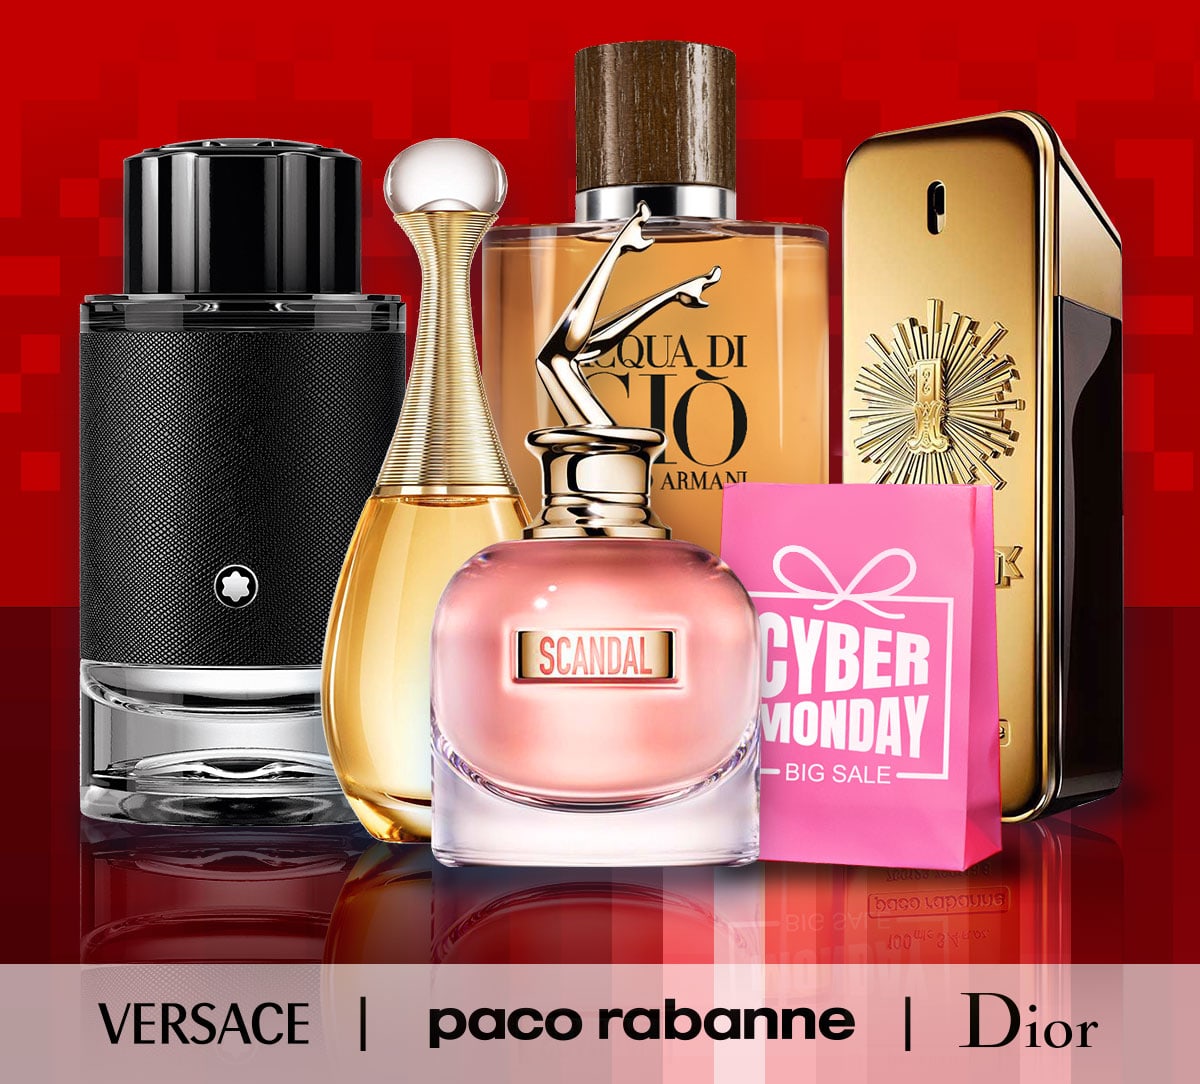 Cyber Monday The Sequel Perfume